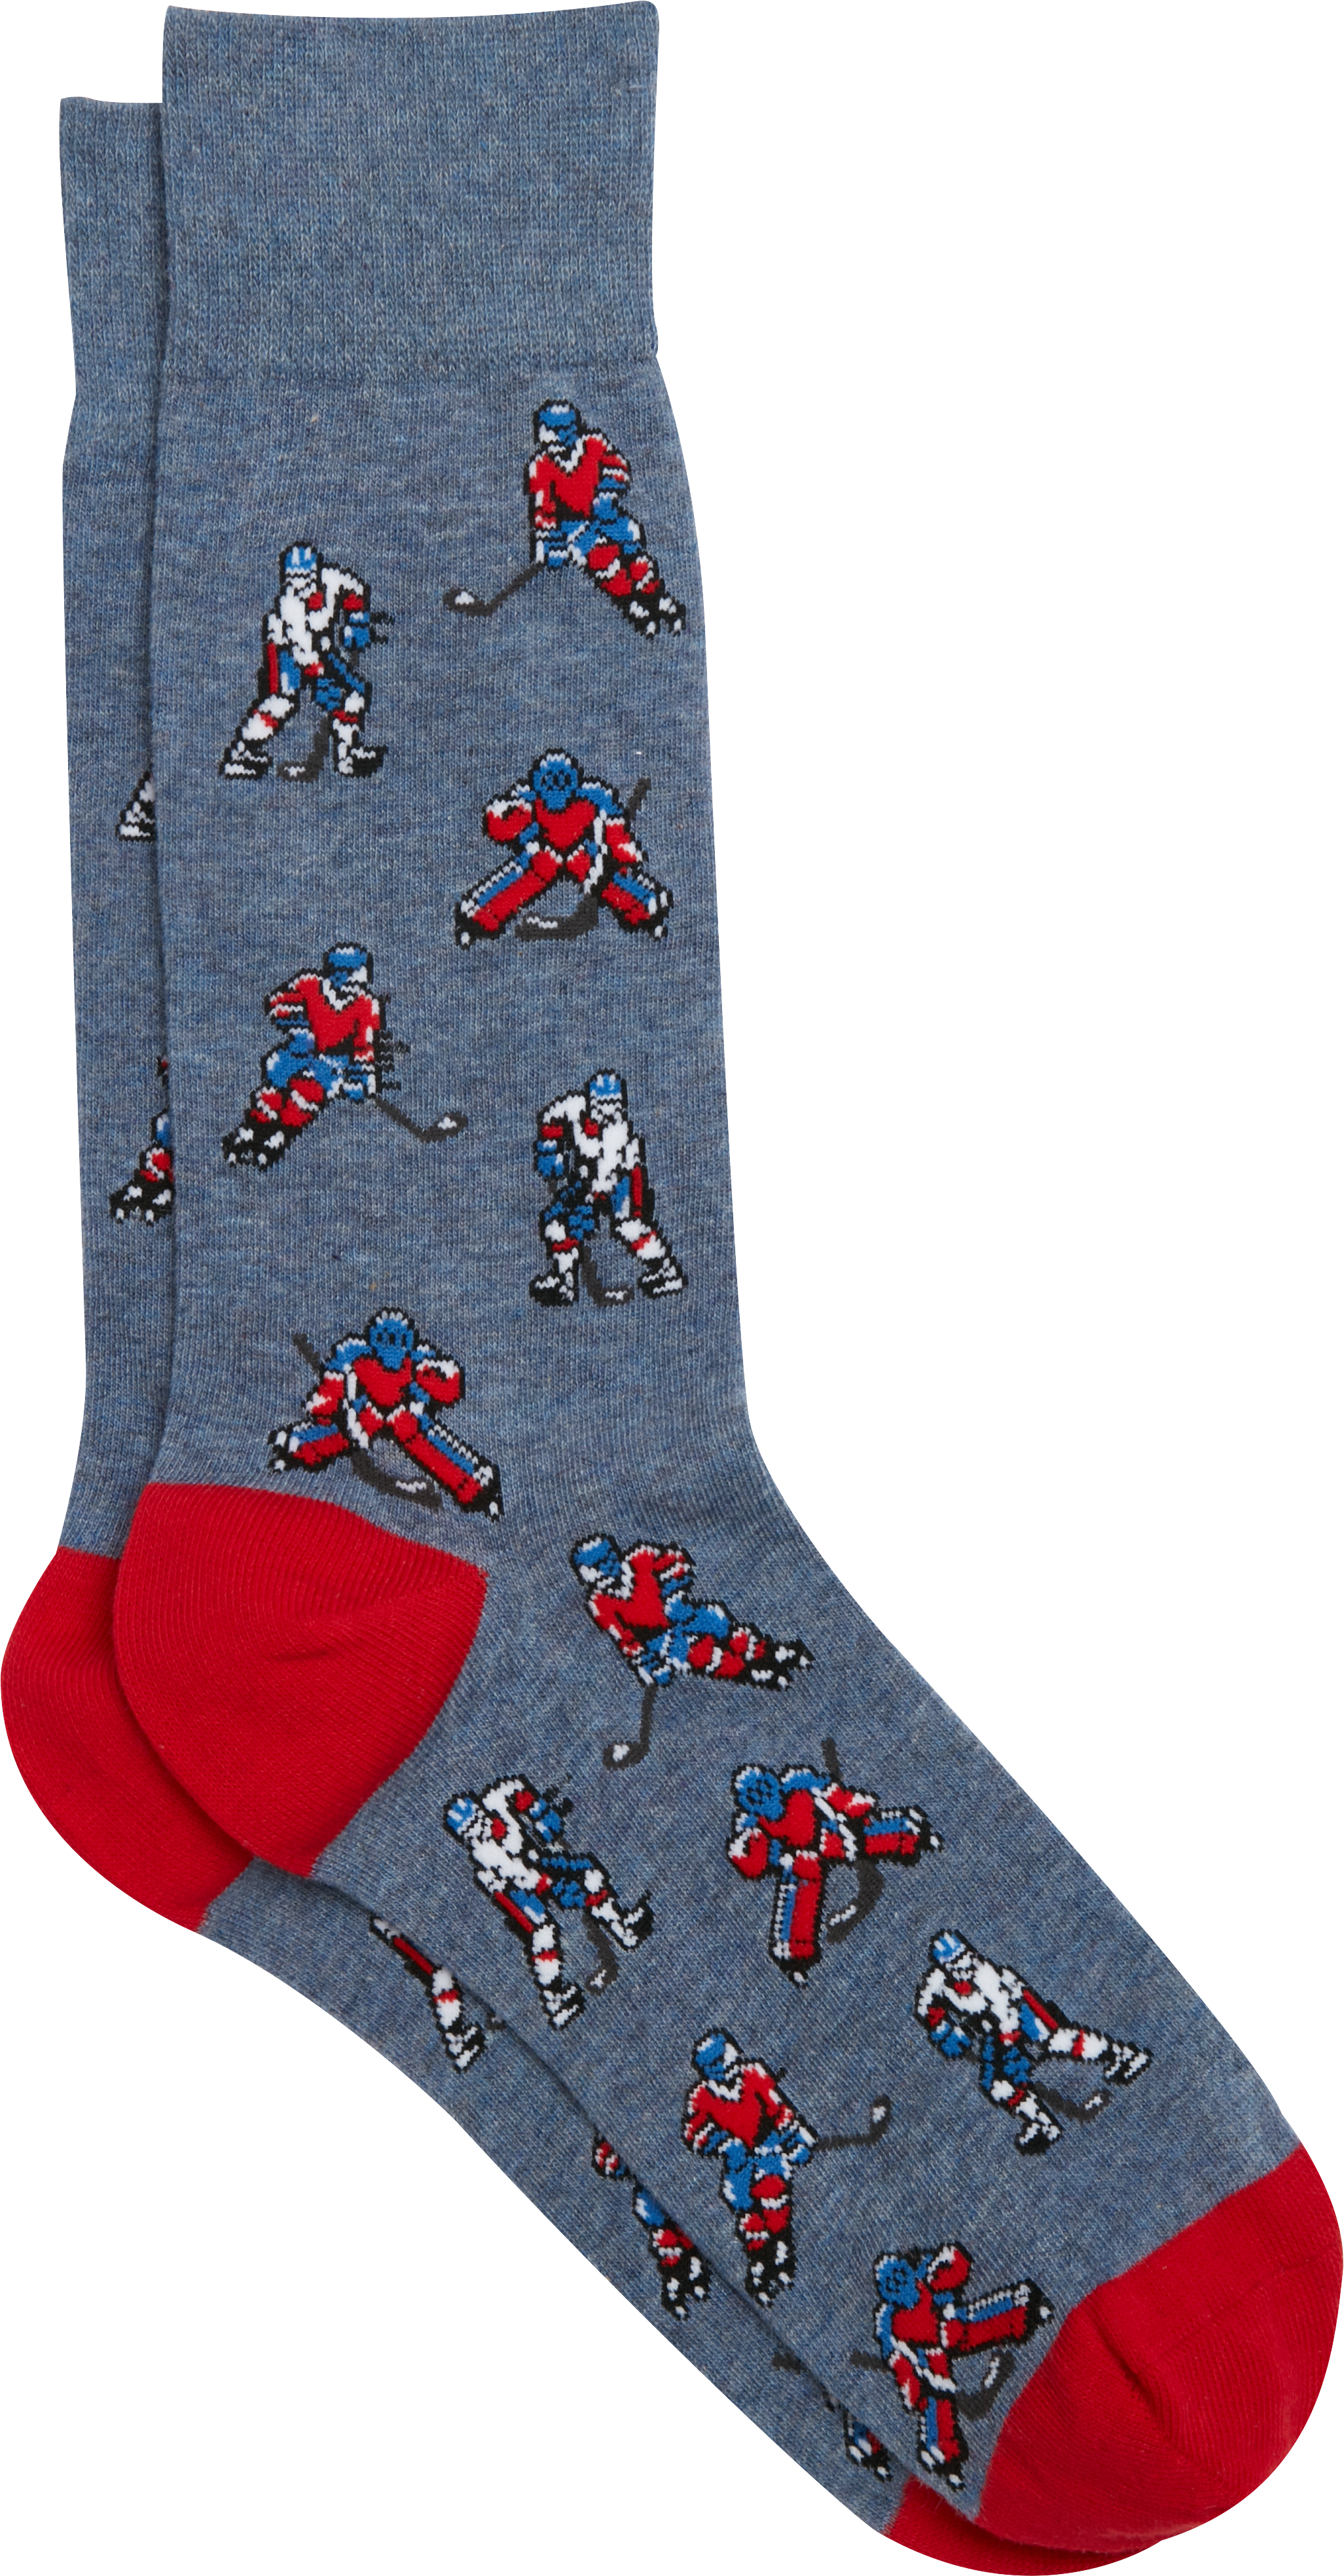 Hockey Player Socks